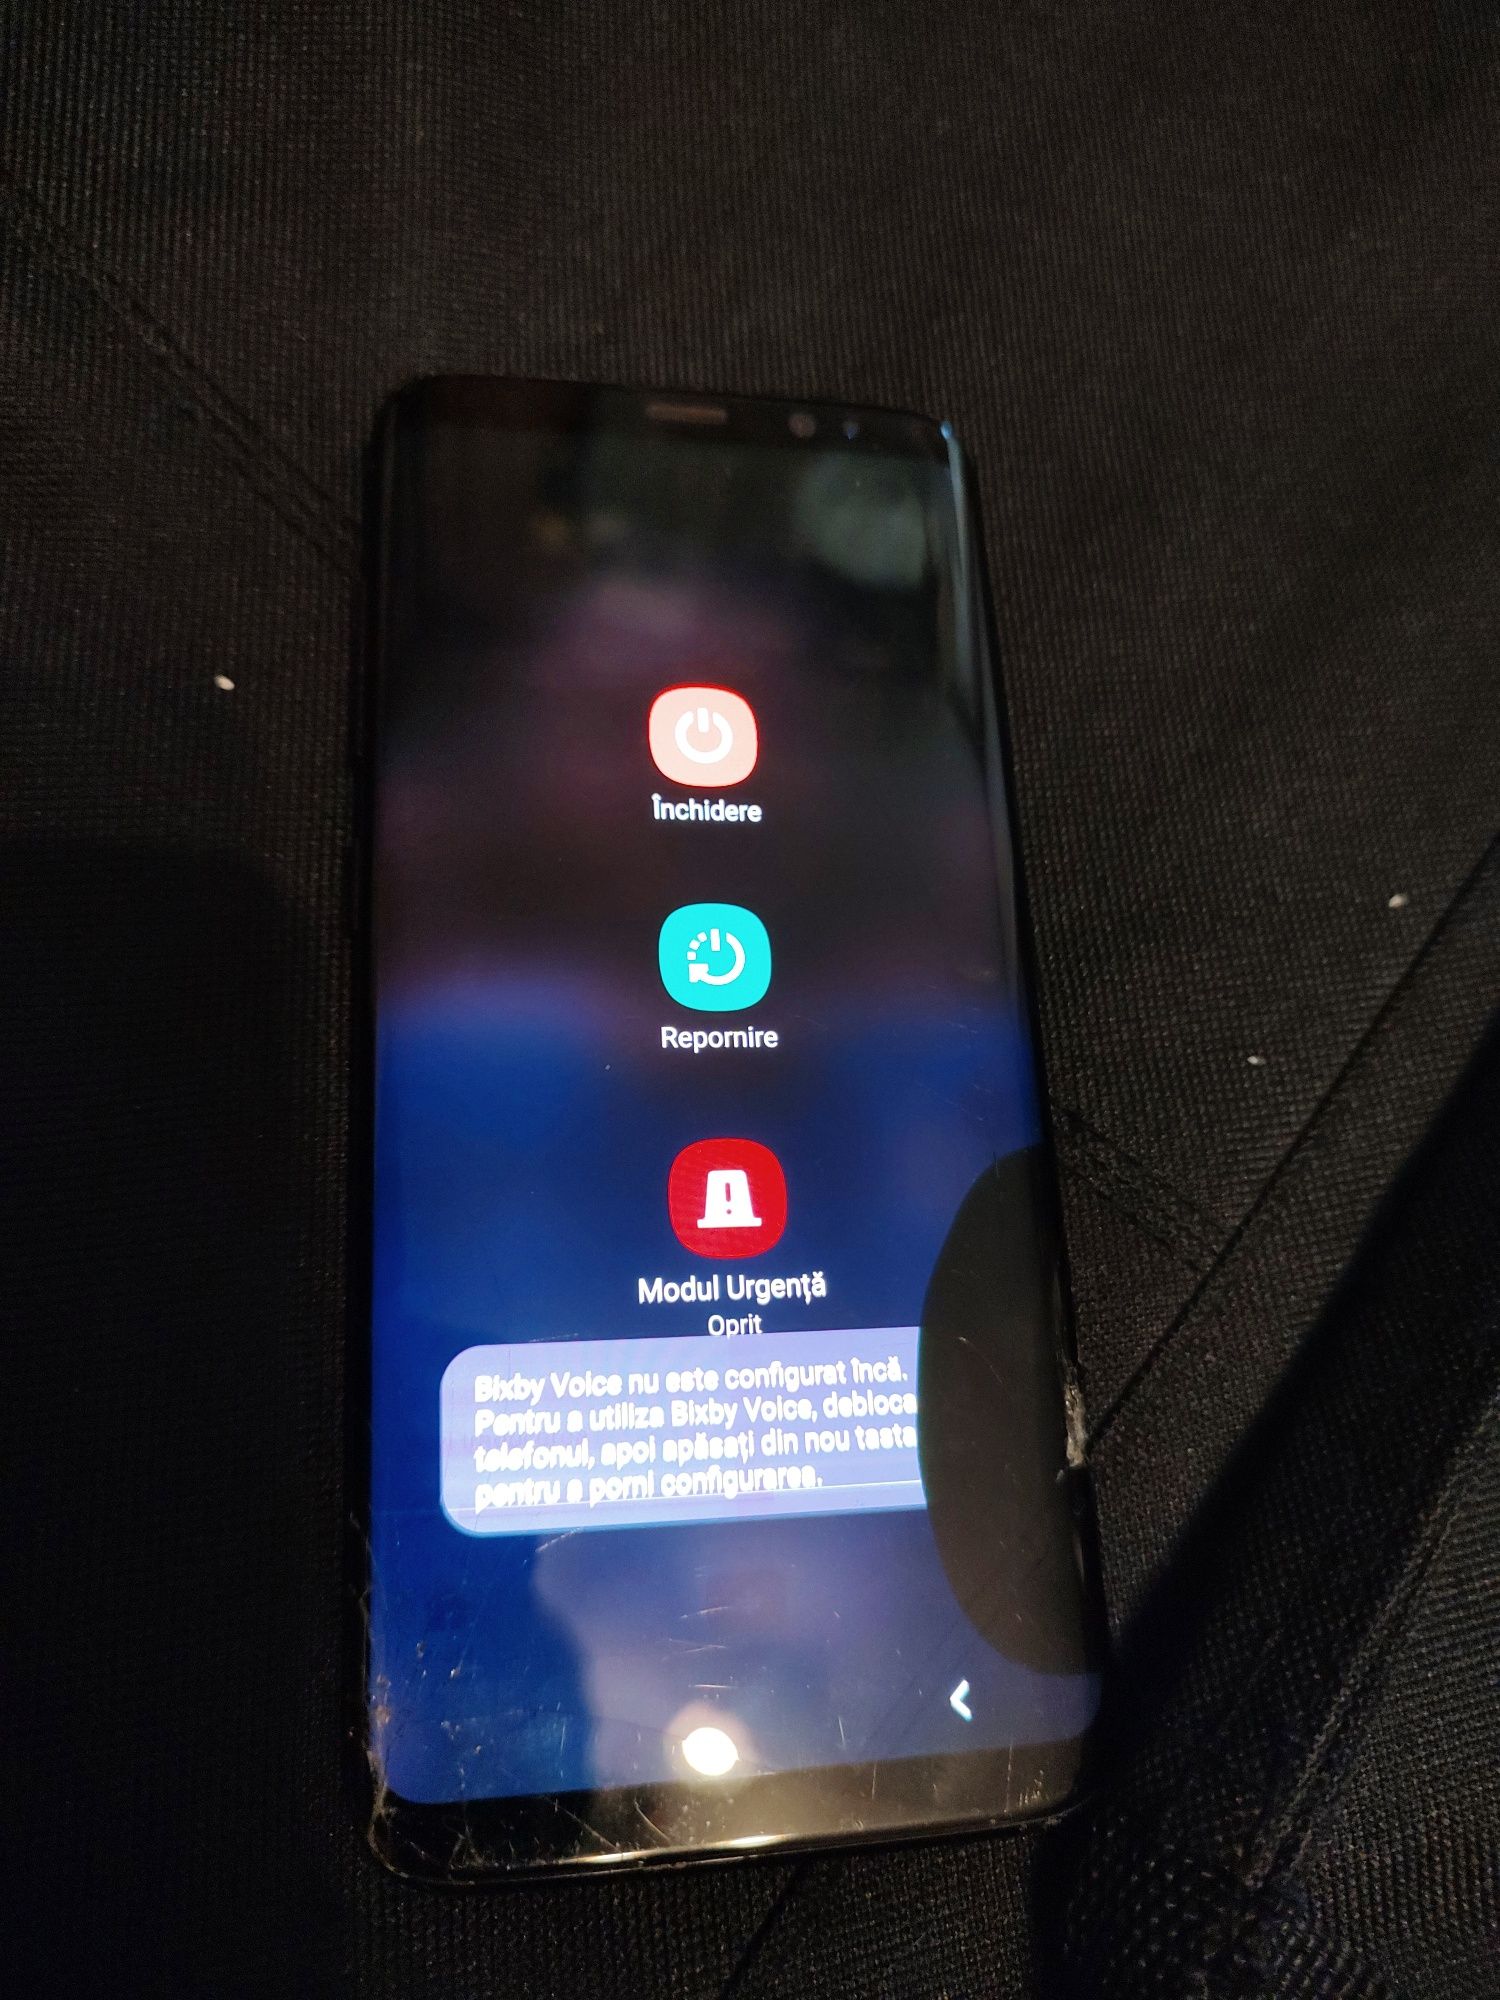 Samsung Galaxy S8 , liber de rețea( display defect )